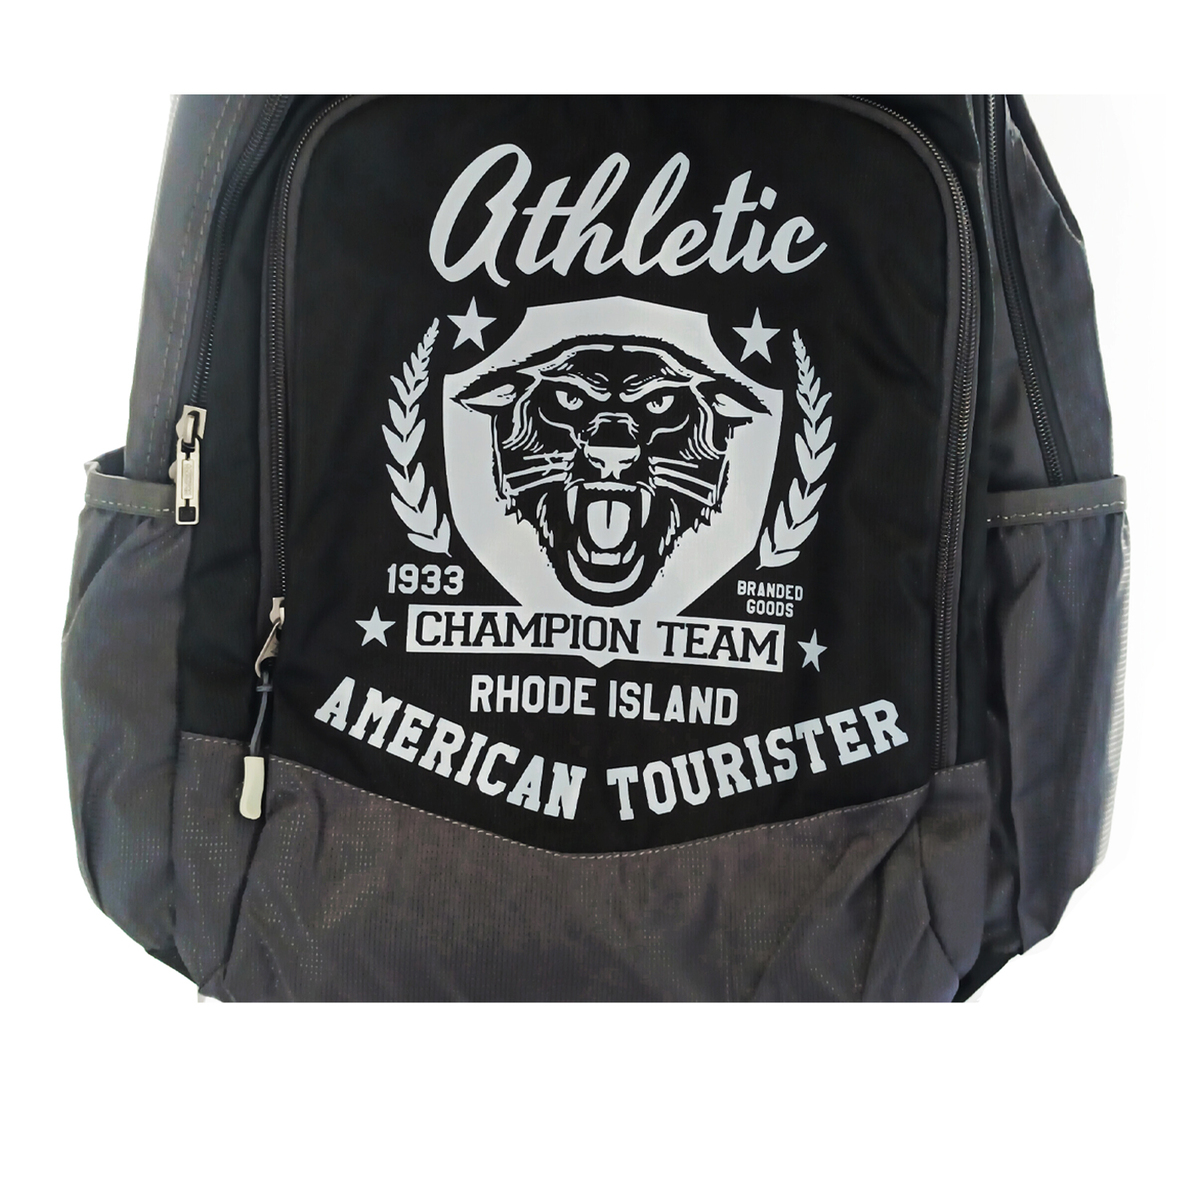 American Tourister Back Pack Volt 02 Black Assorted Colour & Design